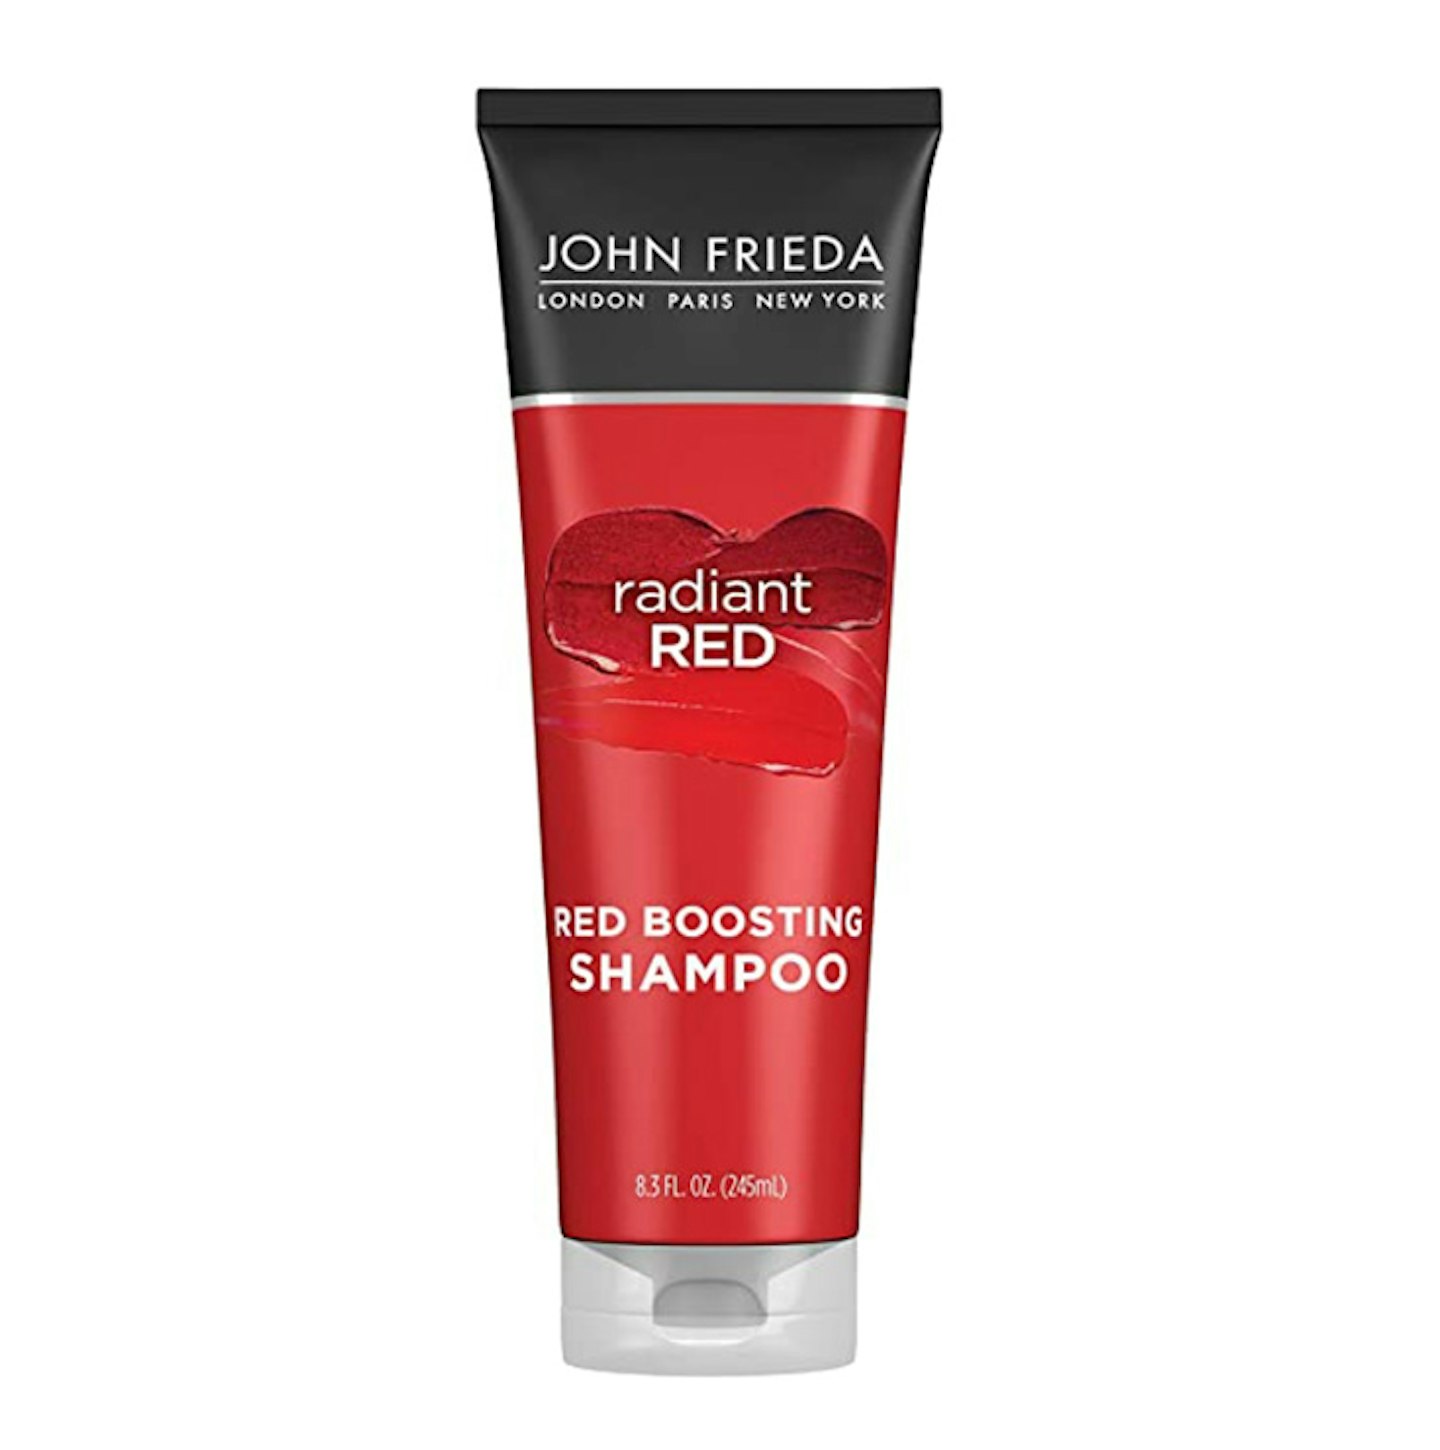 John Frieda Radiant Red Boosting Shampoo